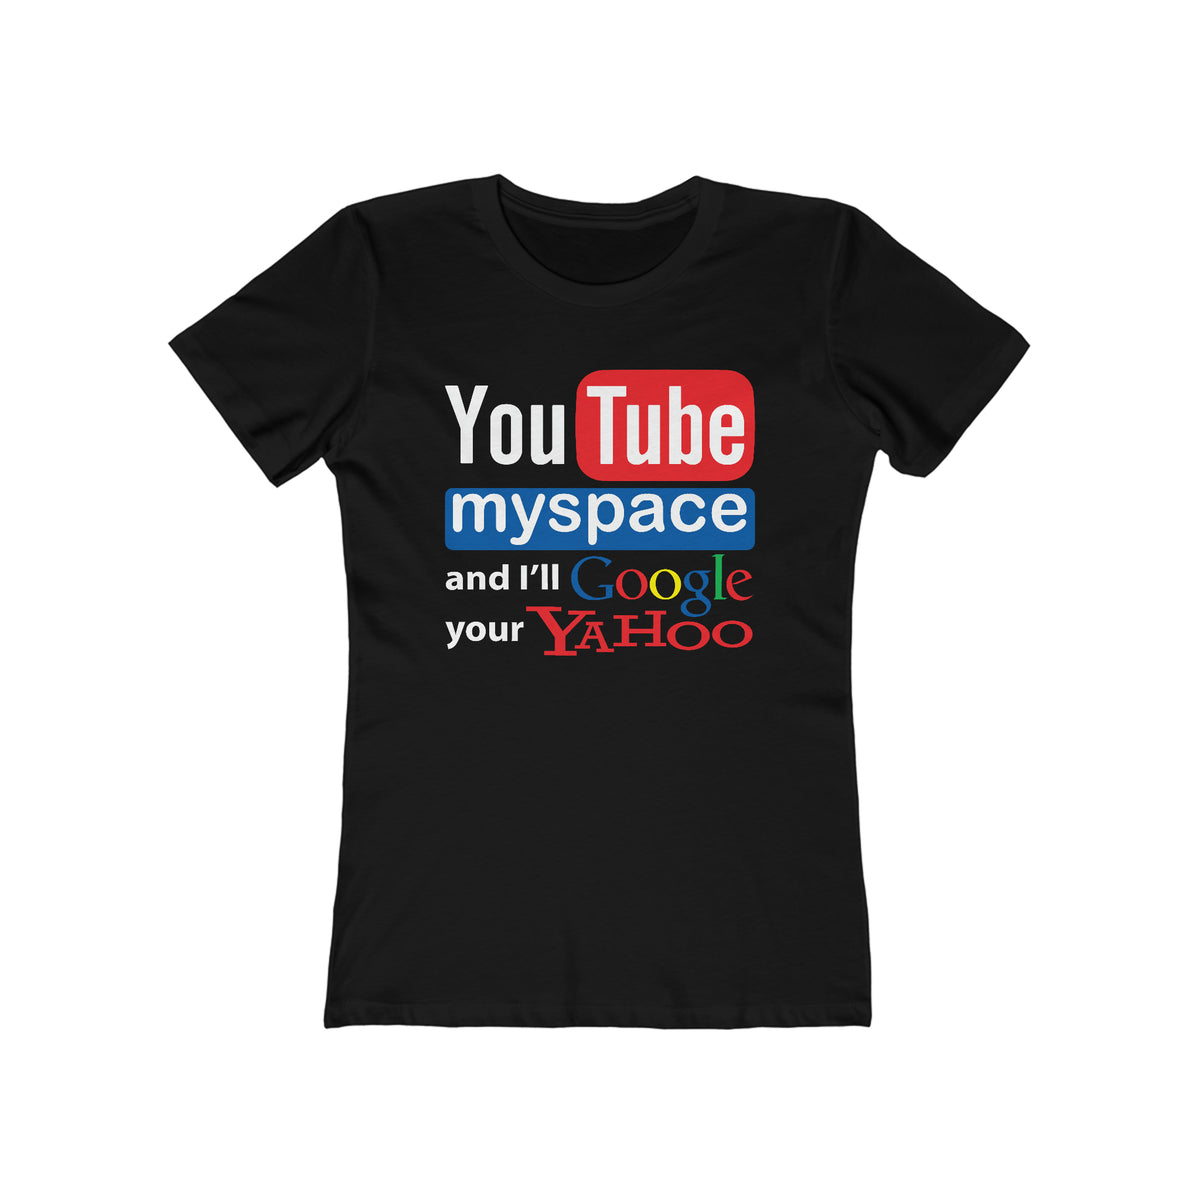 Youtube Myspace And I'll Google Your Yahoo - Women’s T-Shirt